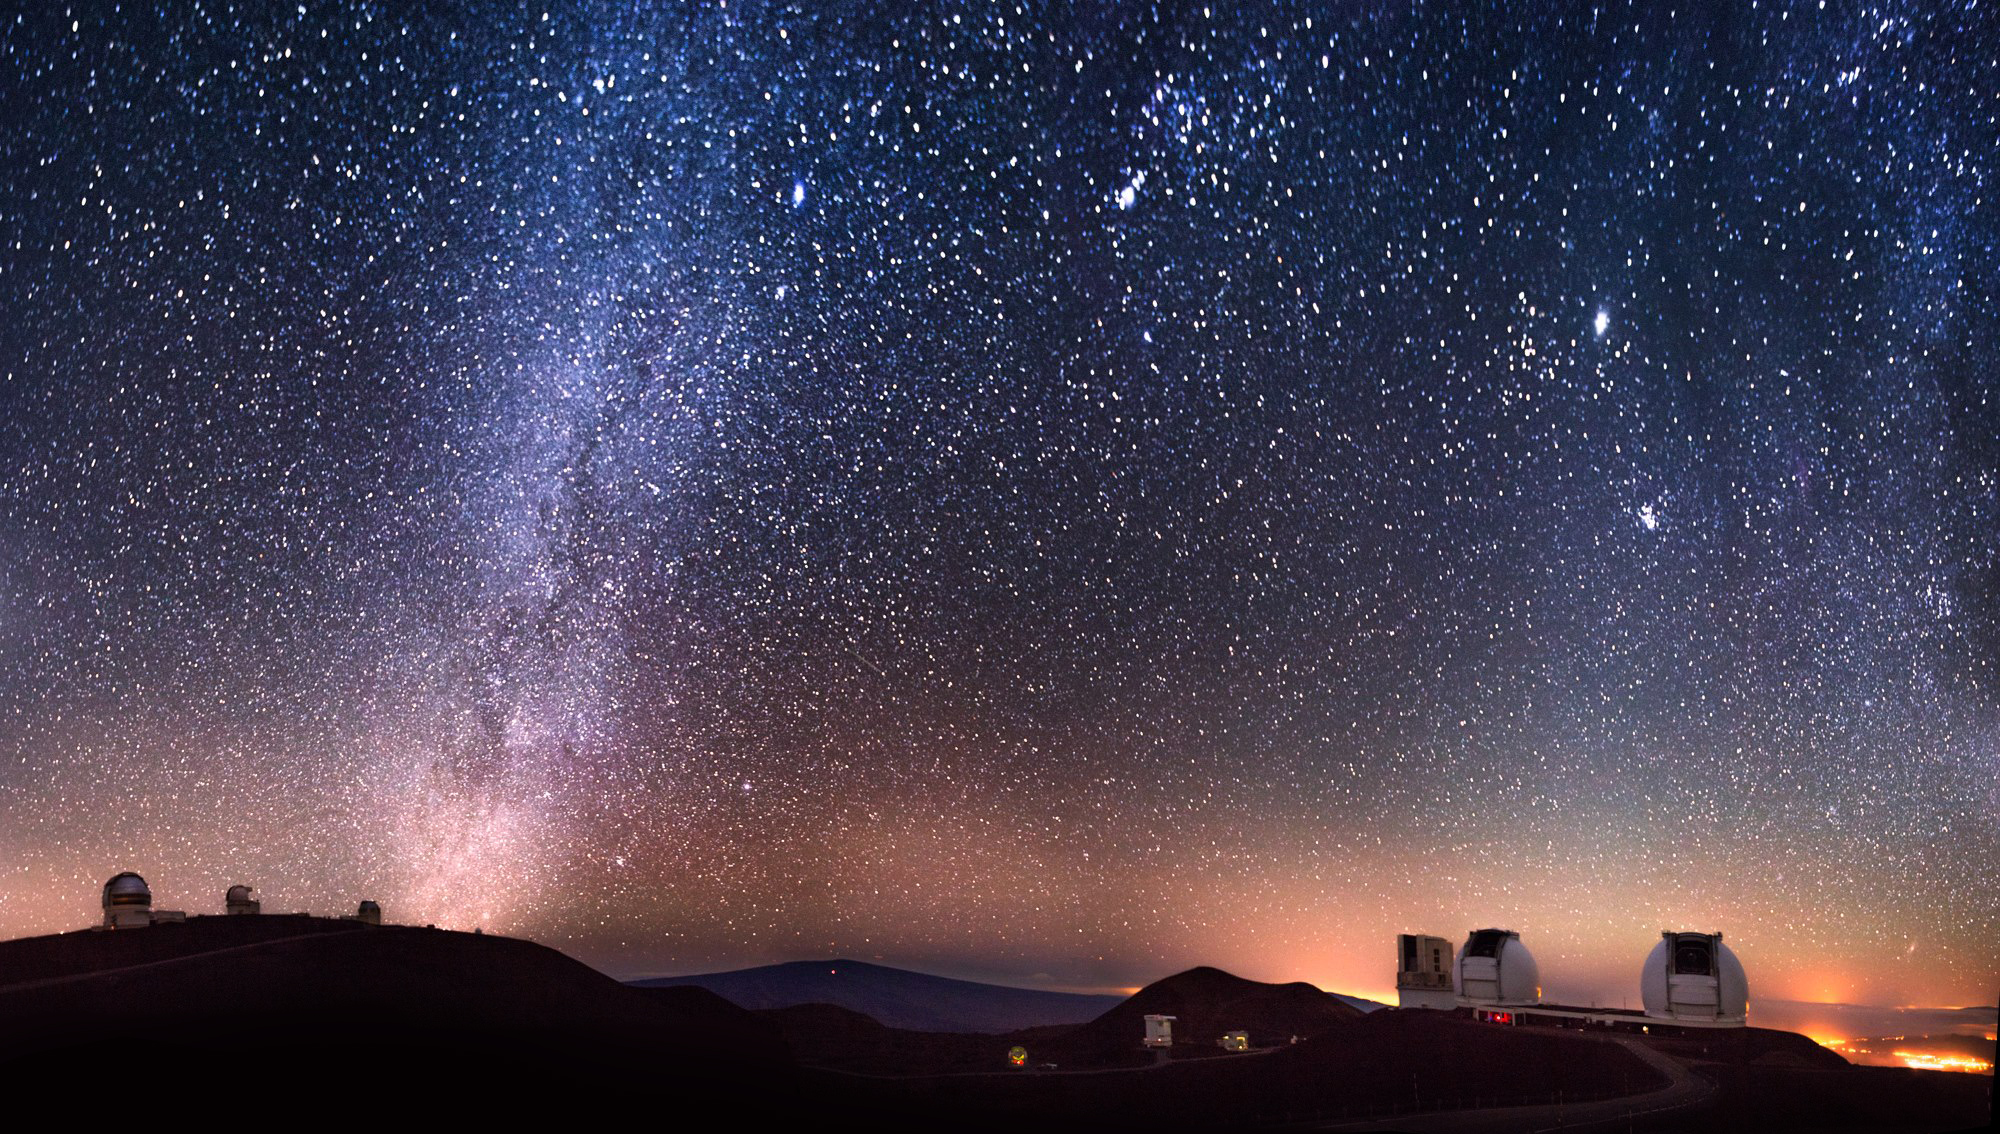 Mauna Kea Observatory in Hawaii under the night sky